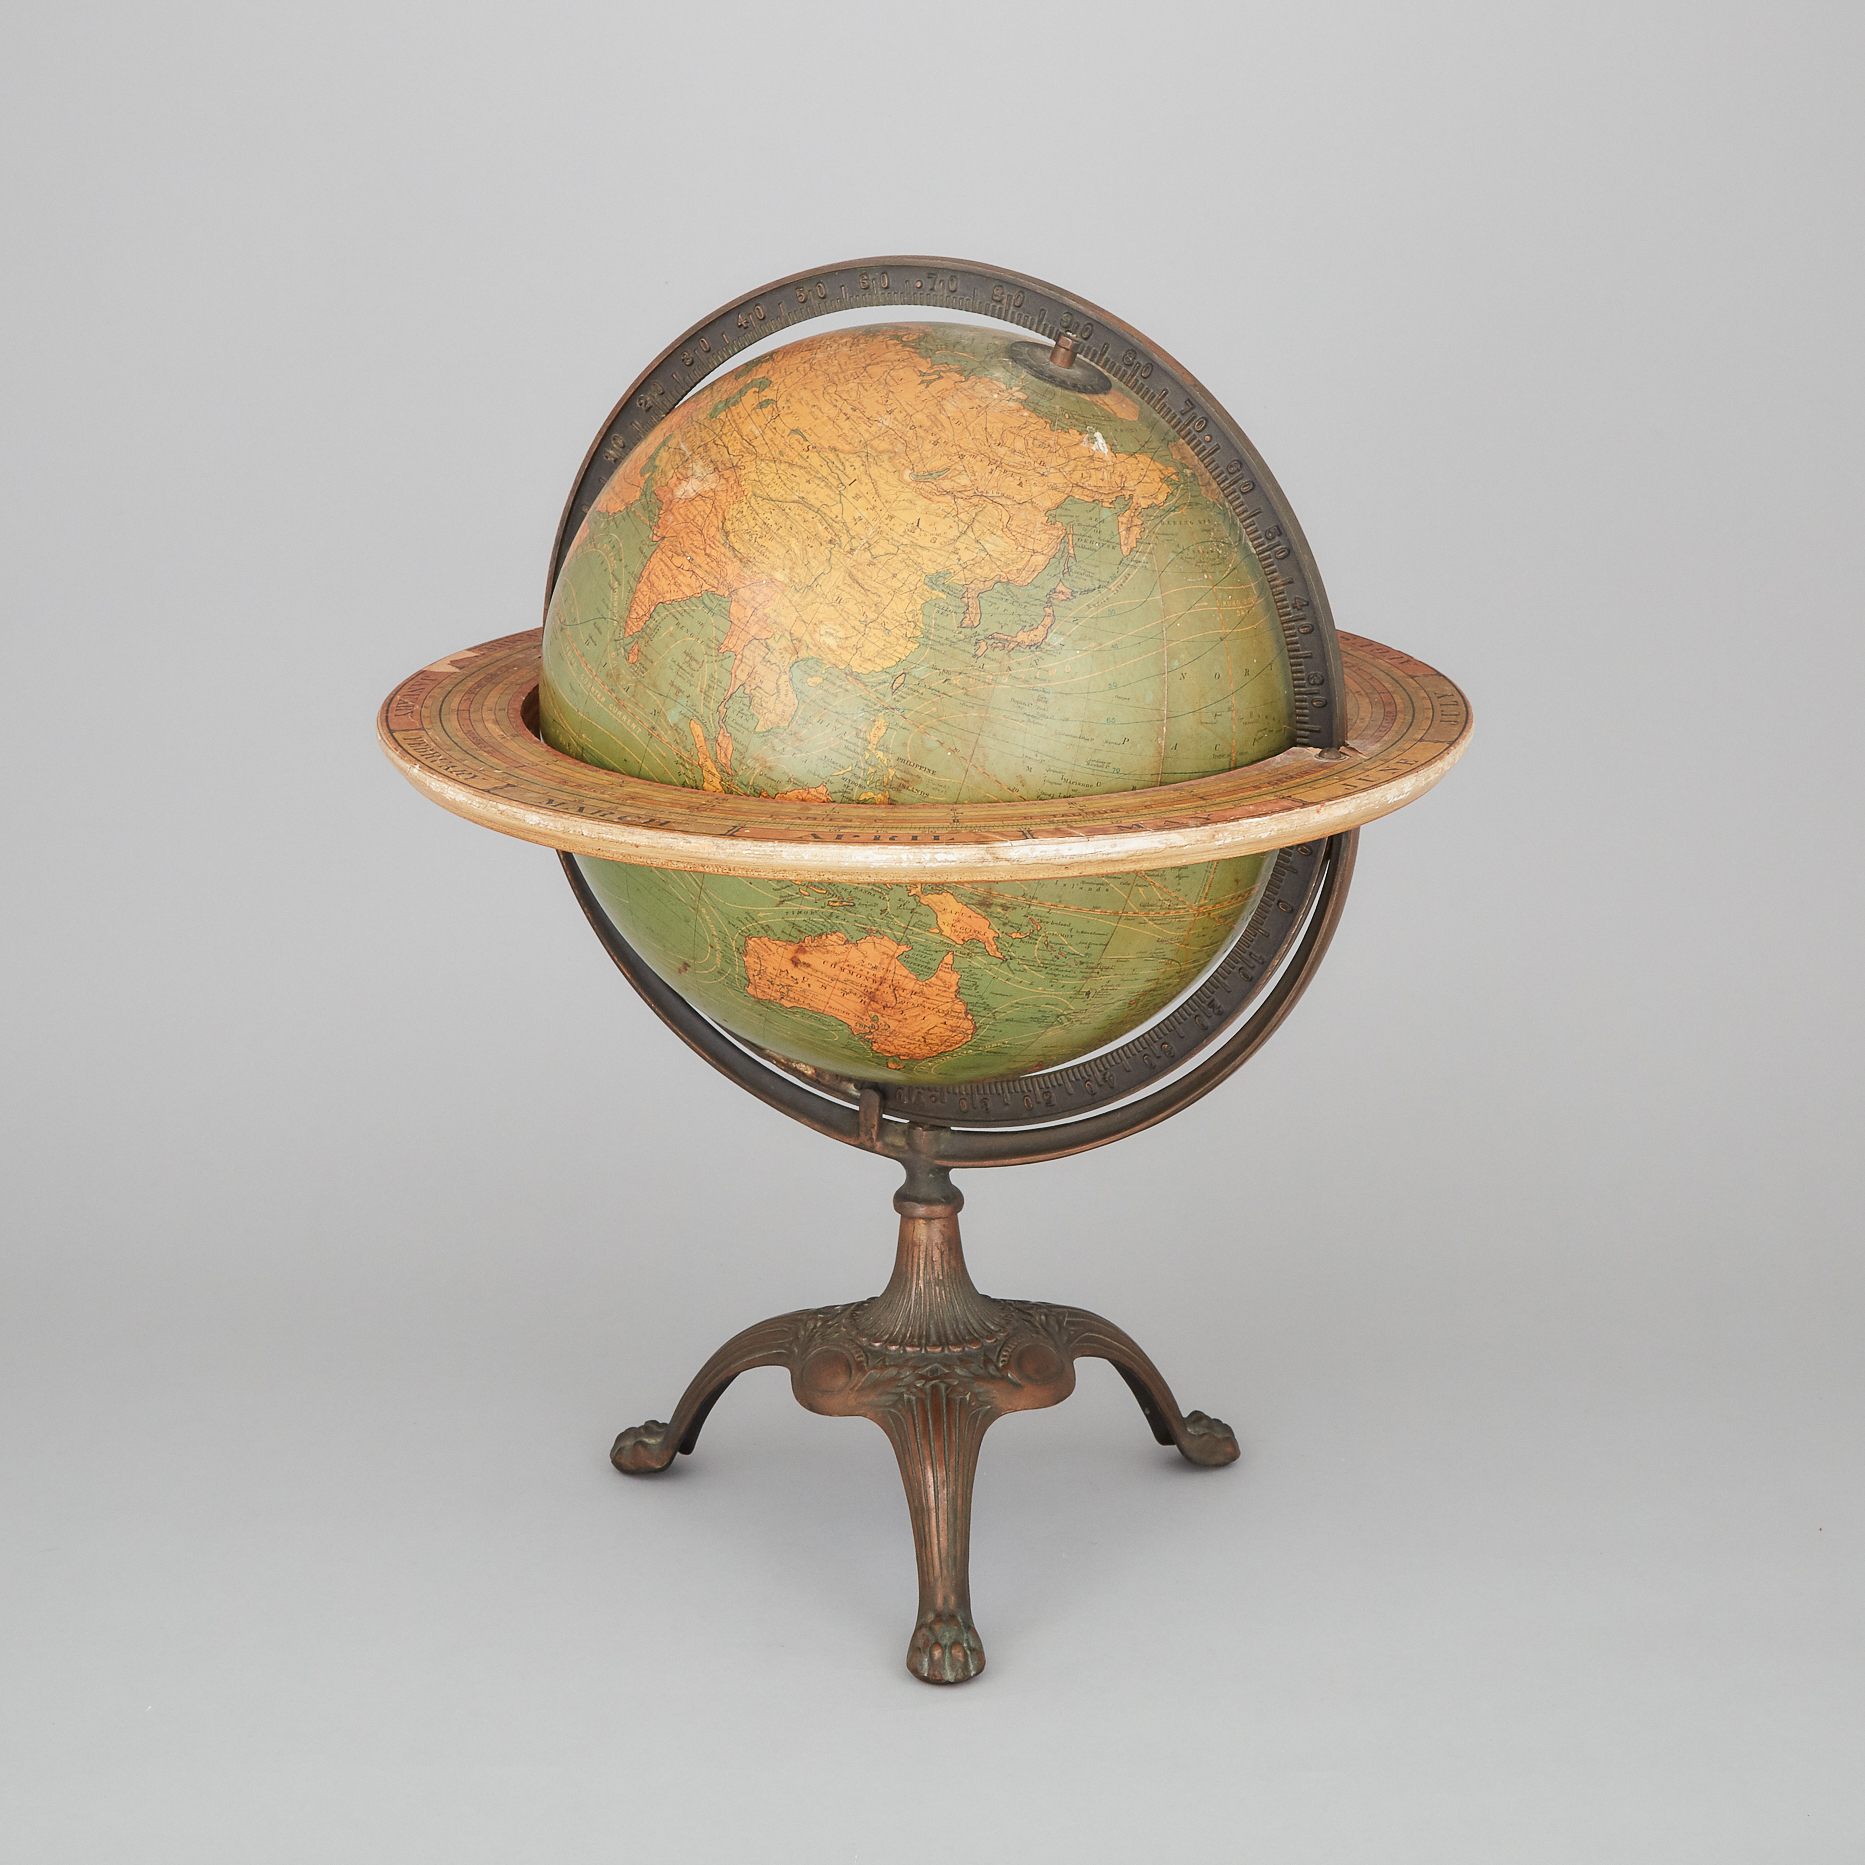 English 12  Inch Terrestrial Table Top Globe, W. & A.K. Johnston, Ltd., London, c. 1930